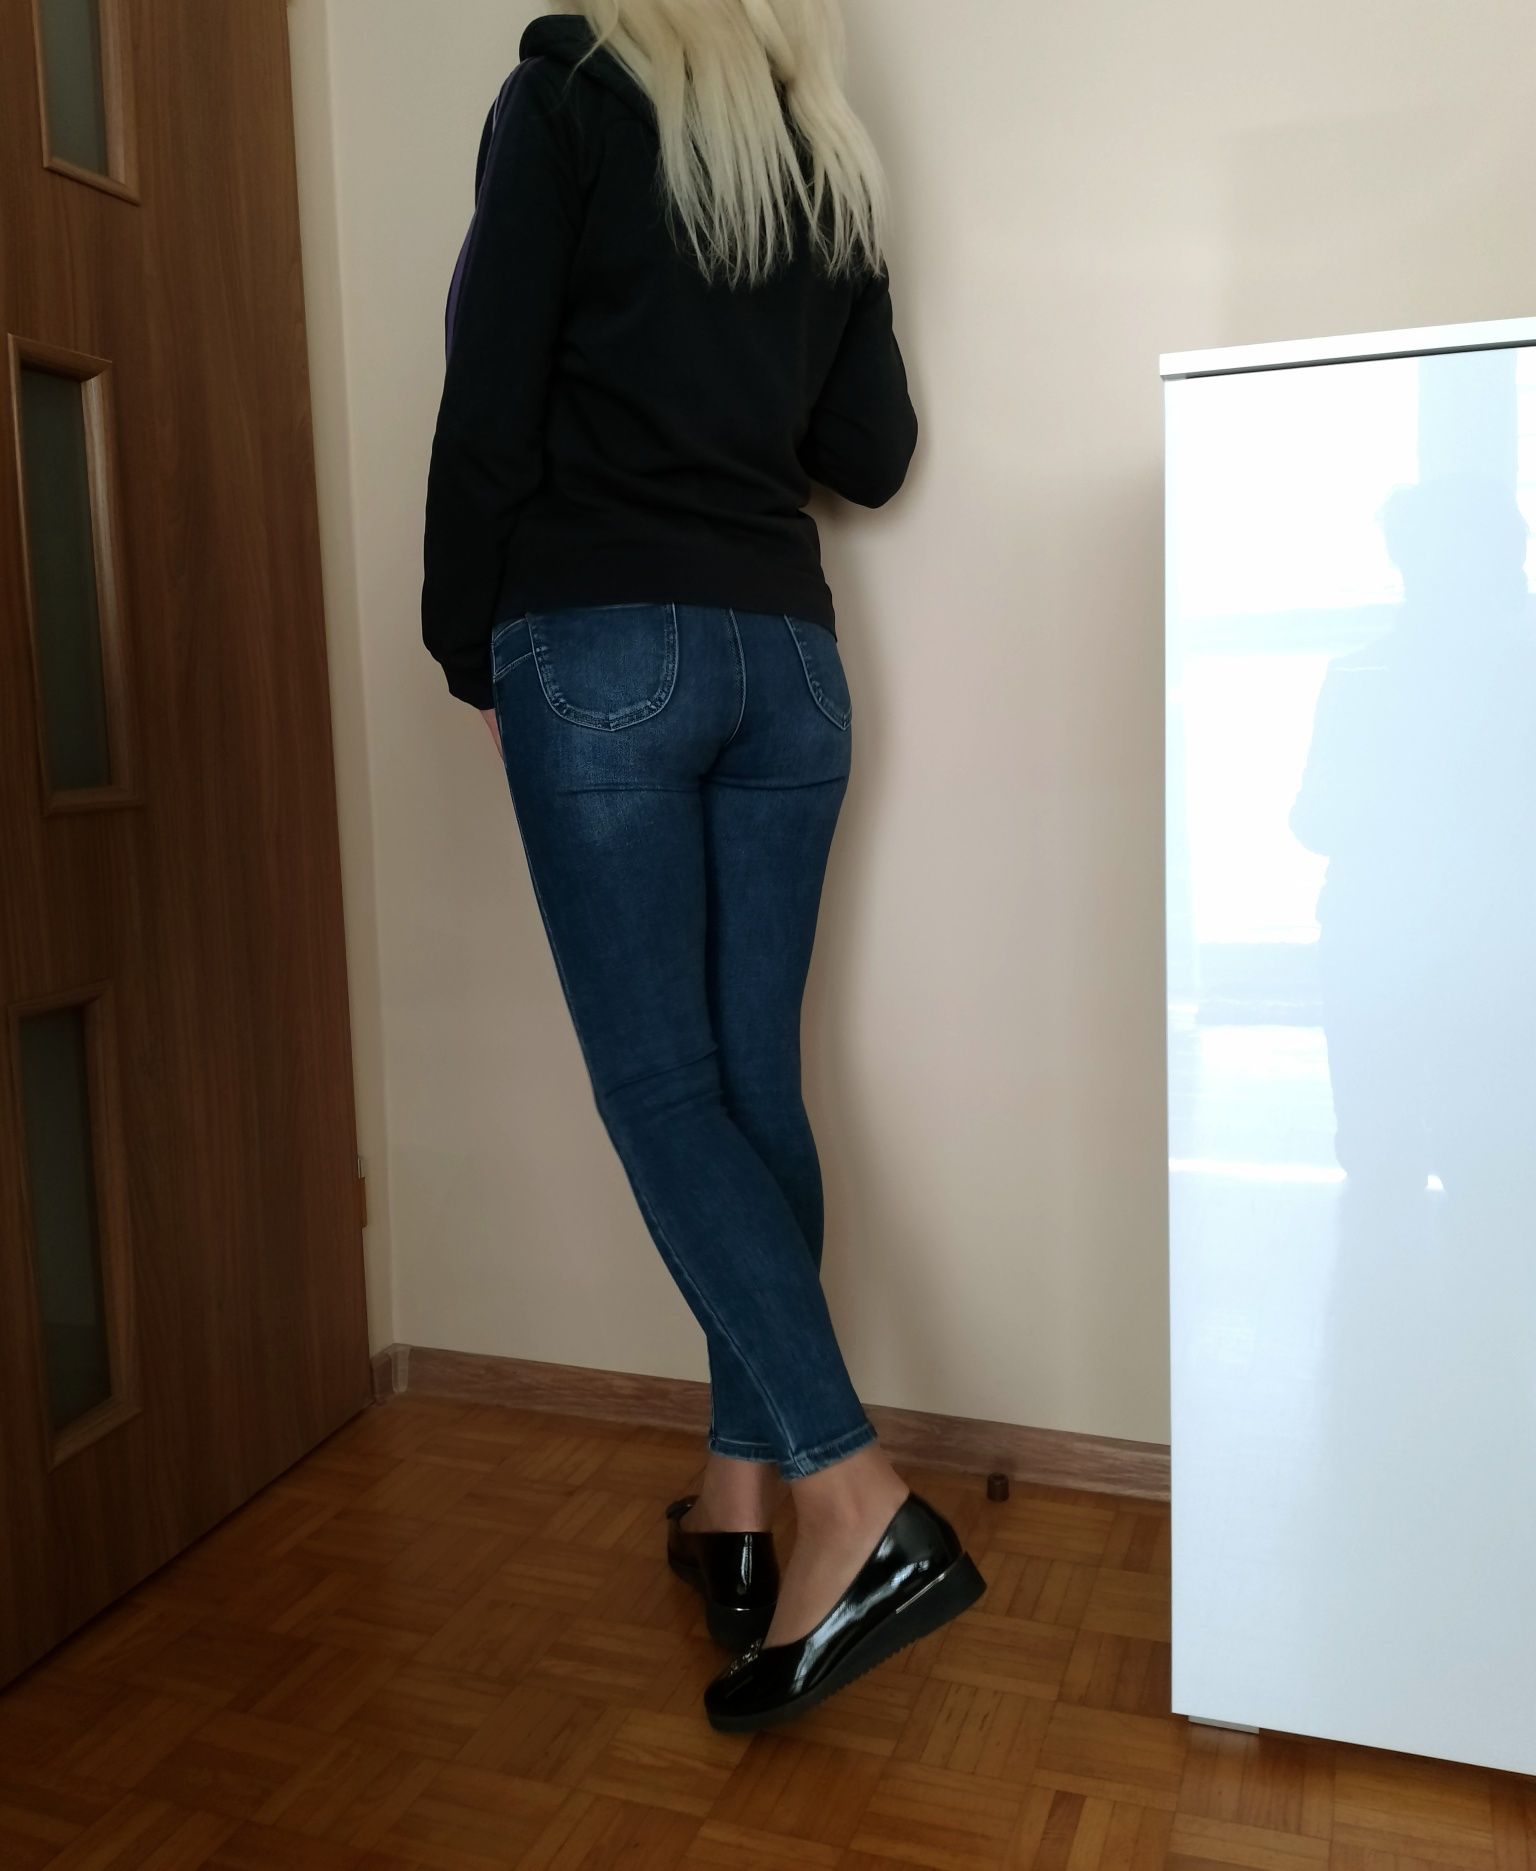 Gratis wysyłka ORYGINALNA bluza damska Adidas czarna kaptur zamek M L